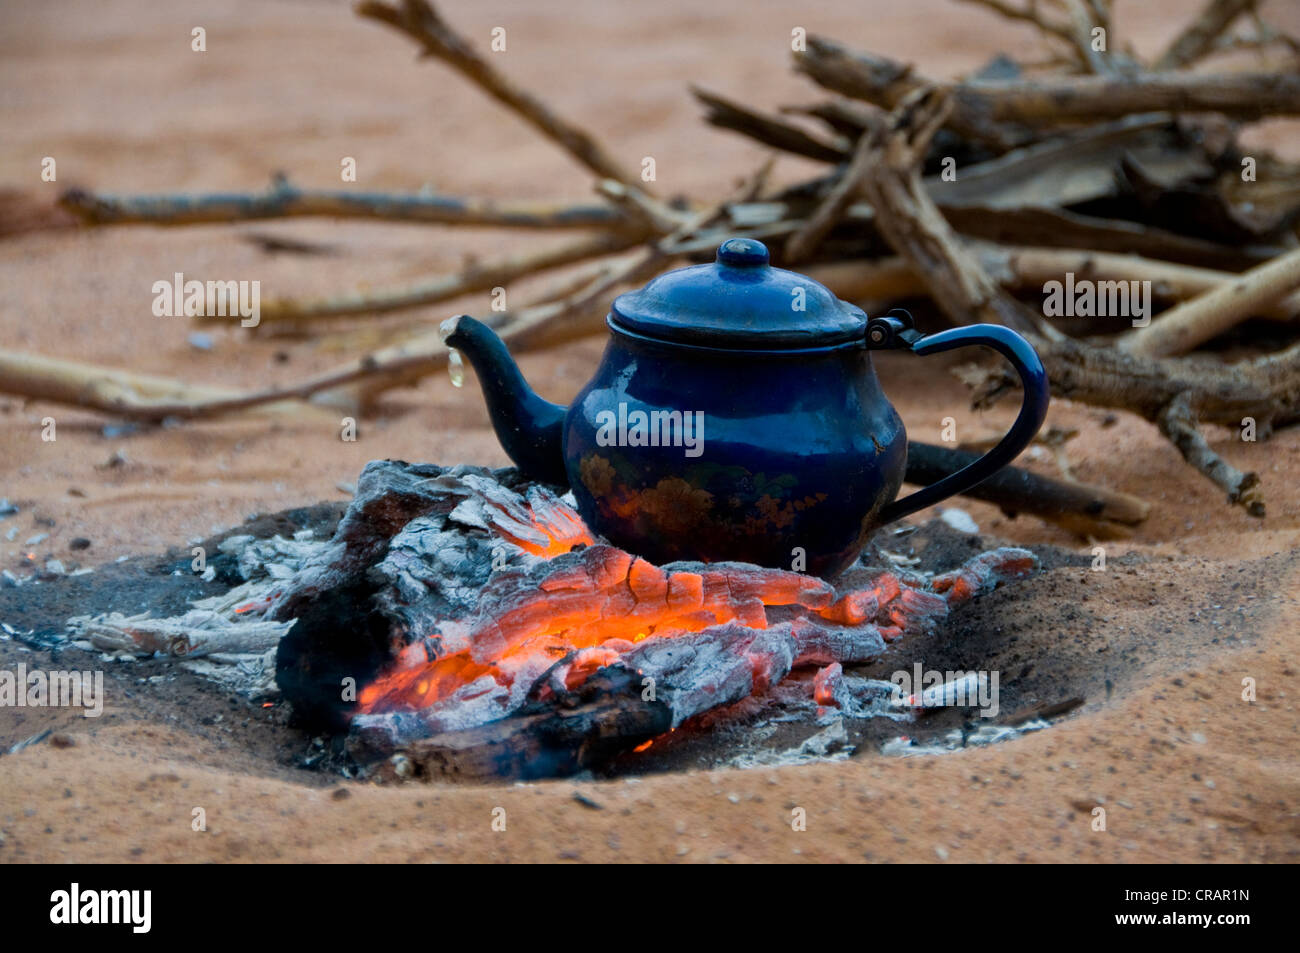 Cooking pot fire africa -Fotos und -Bildmaterial in hoher Auflösung – Alamy